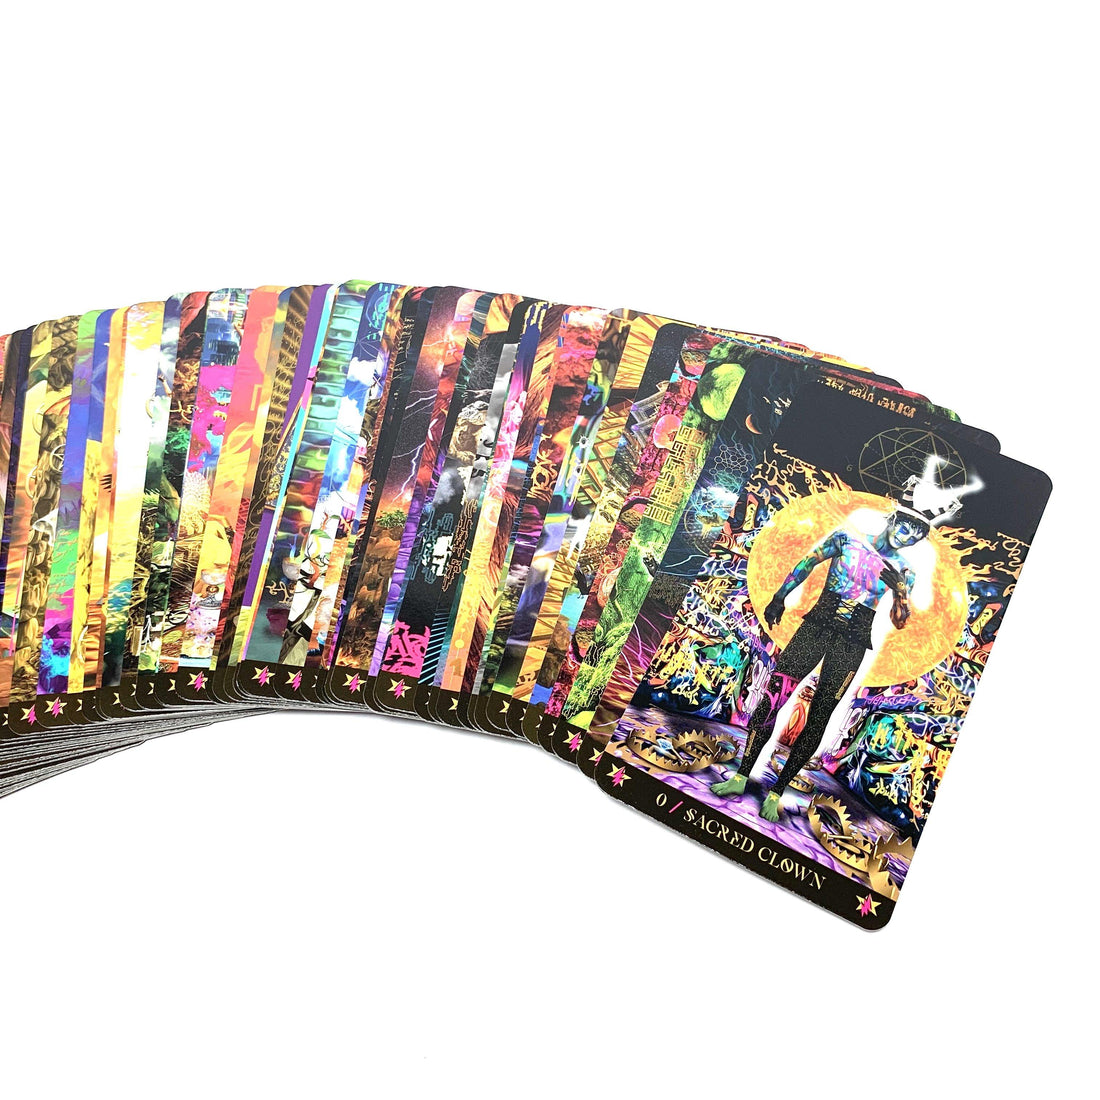 Starman Tarot Deck Tarot Cards Non-HOI 